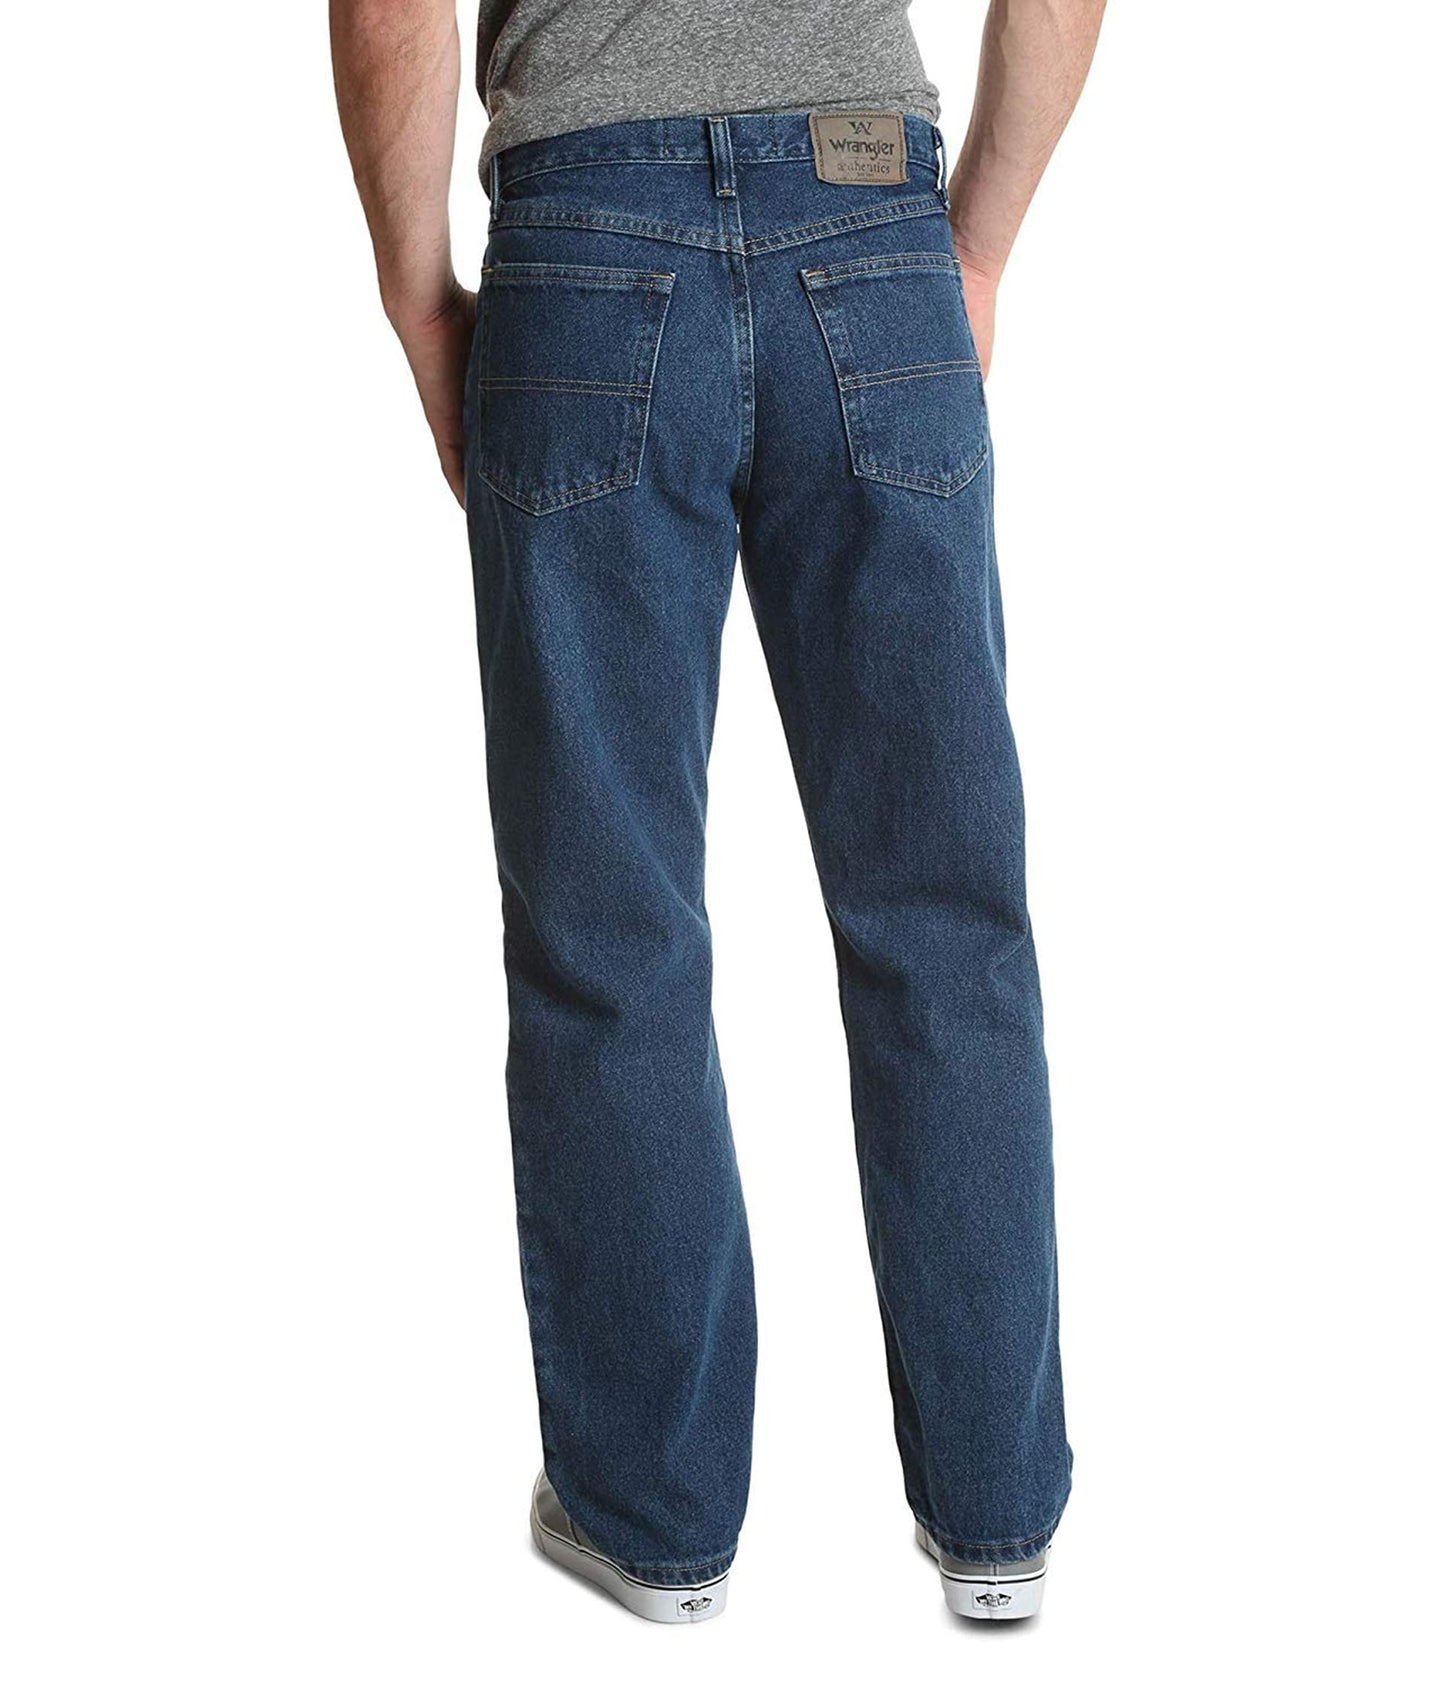 Wrangler Authentics Men's Classic 5-Pocket Relaxed Fit Cotton Jean, Dark Stonewash, 42W x 36L